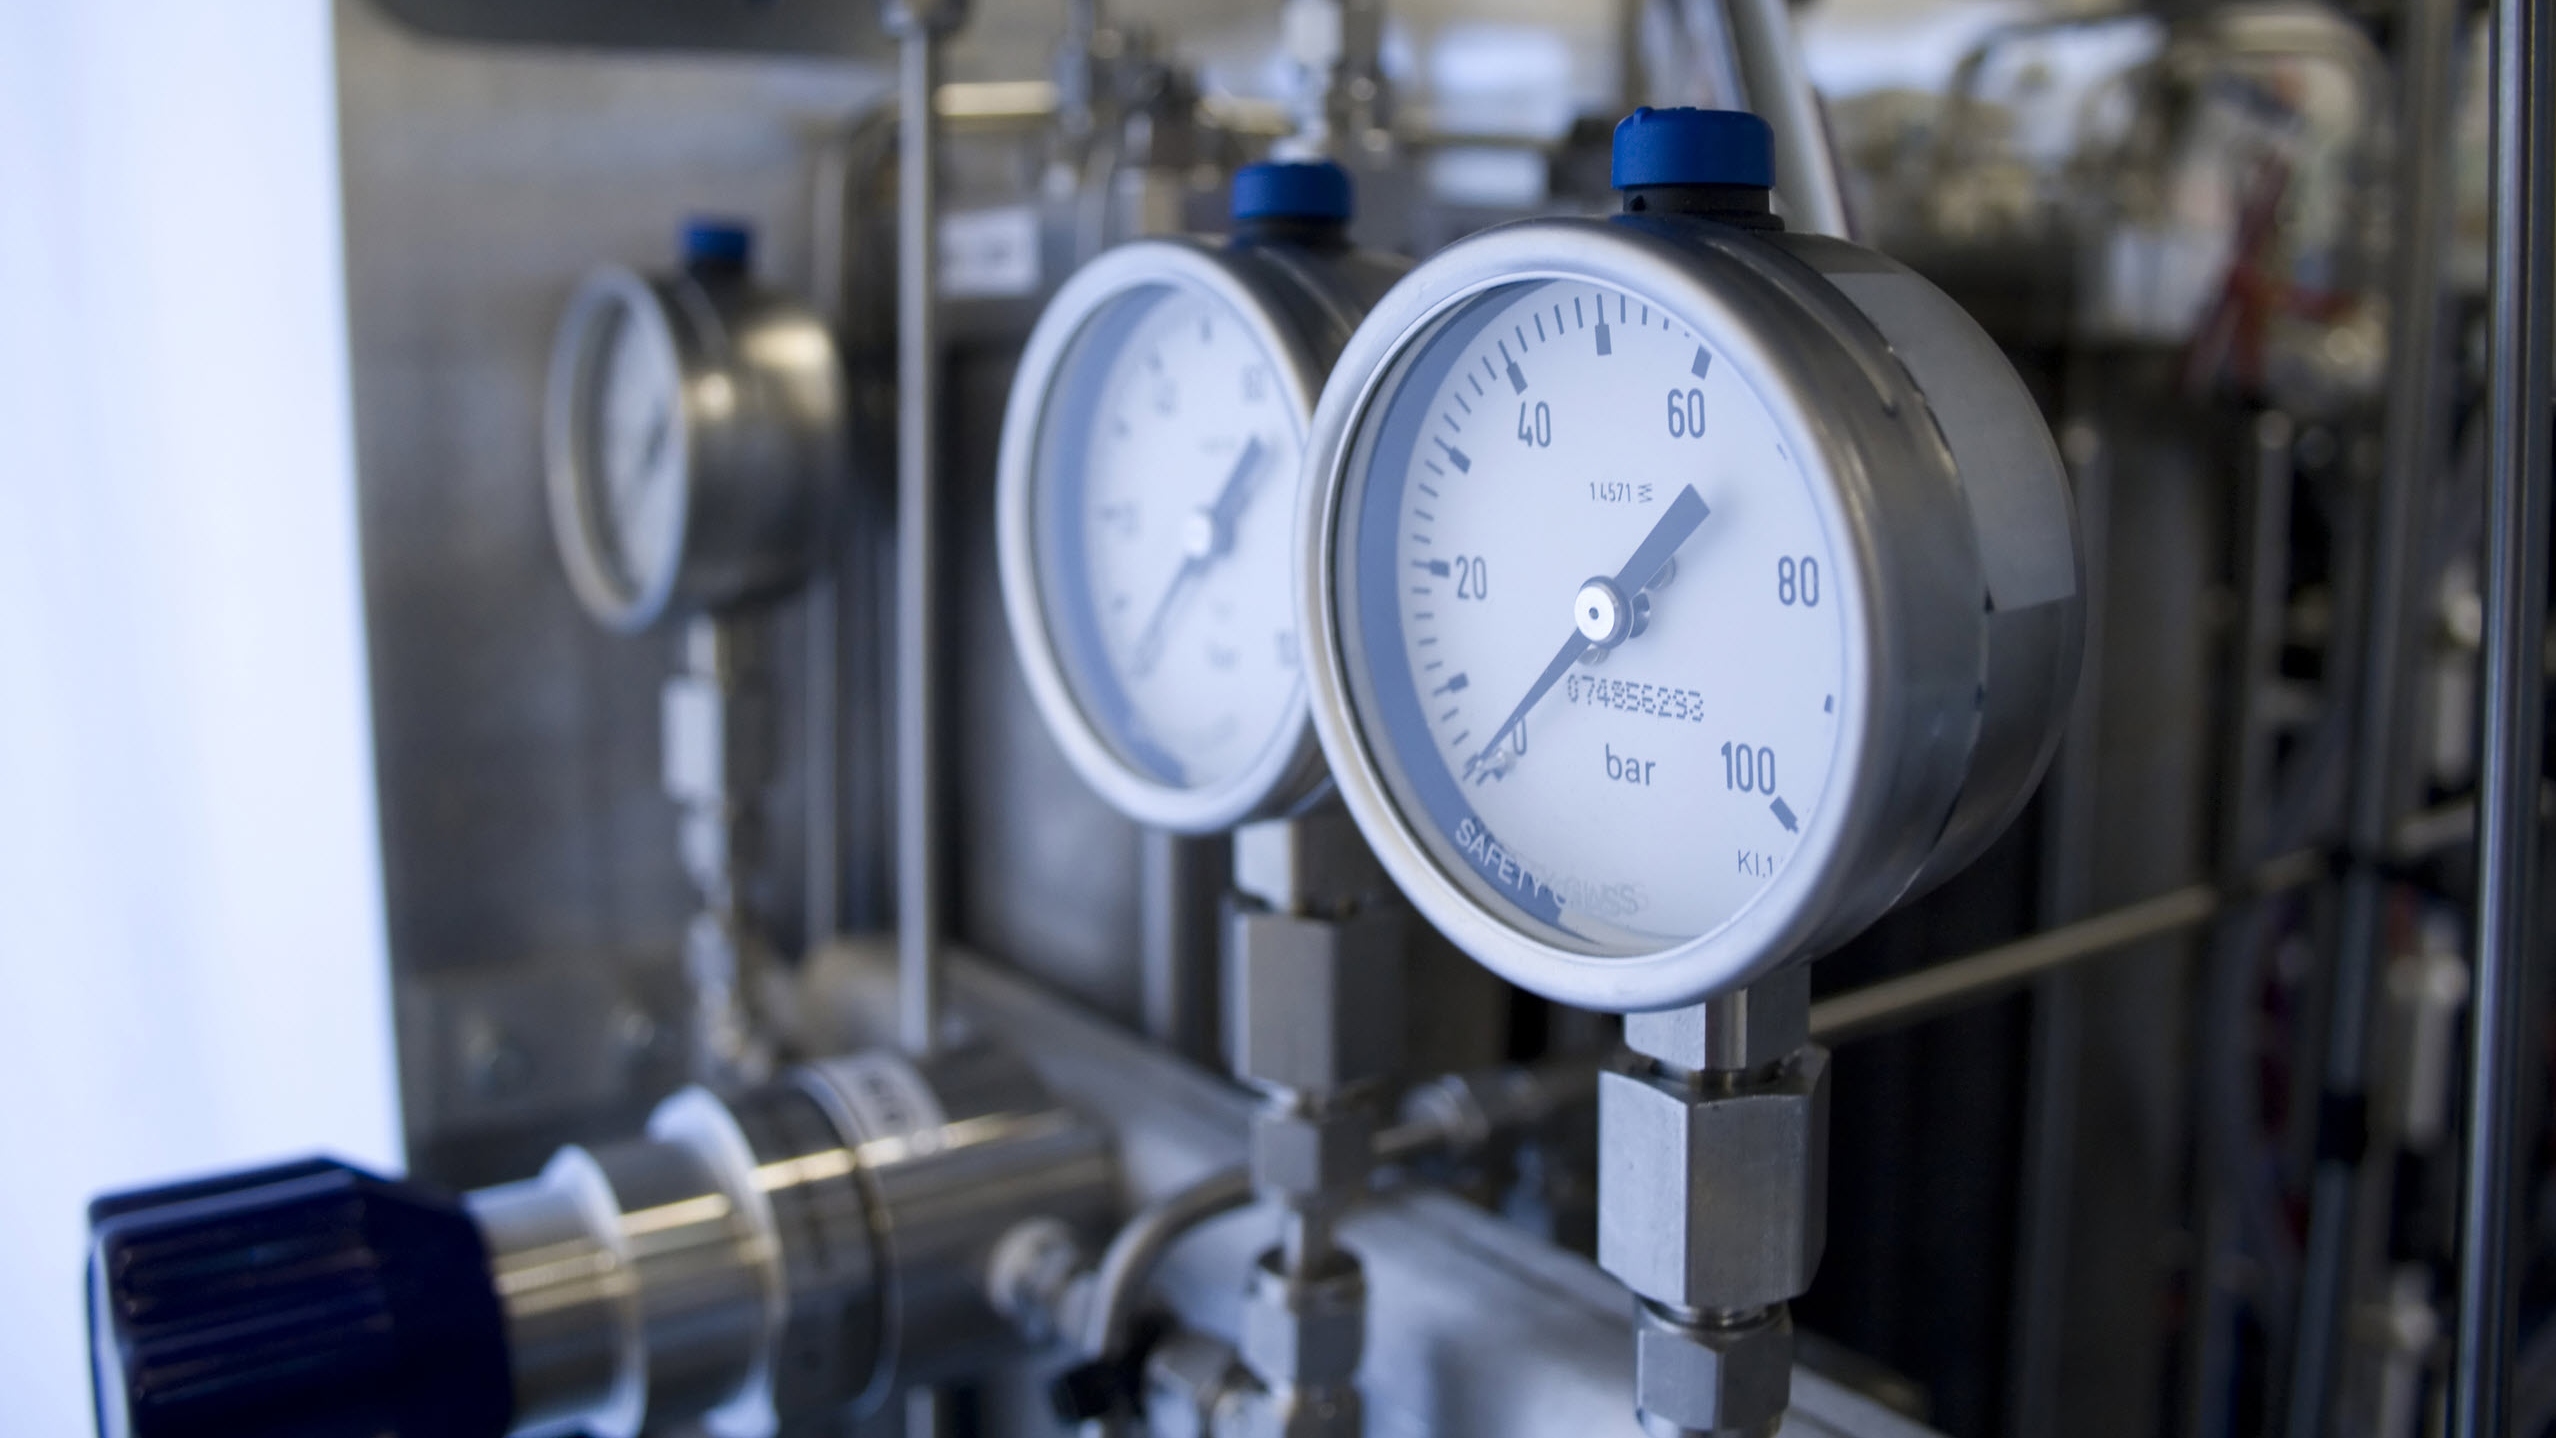 Boiler/Pressure Systems Regulations